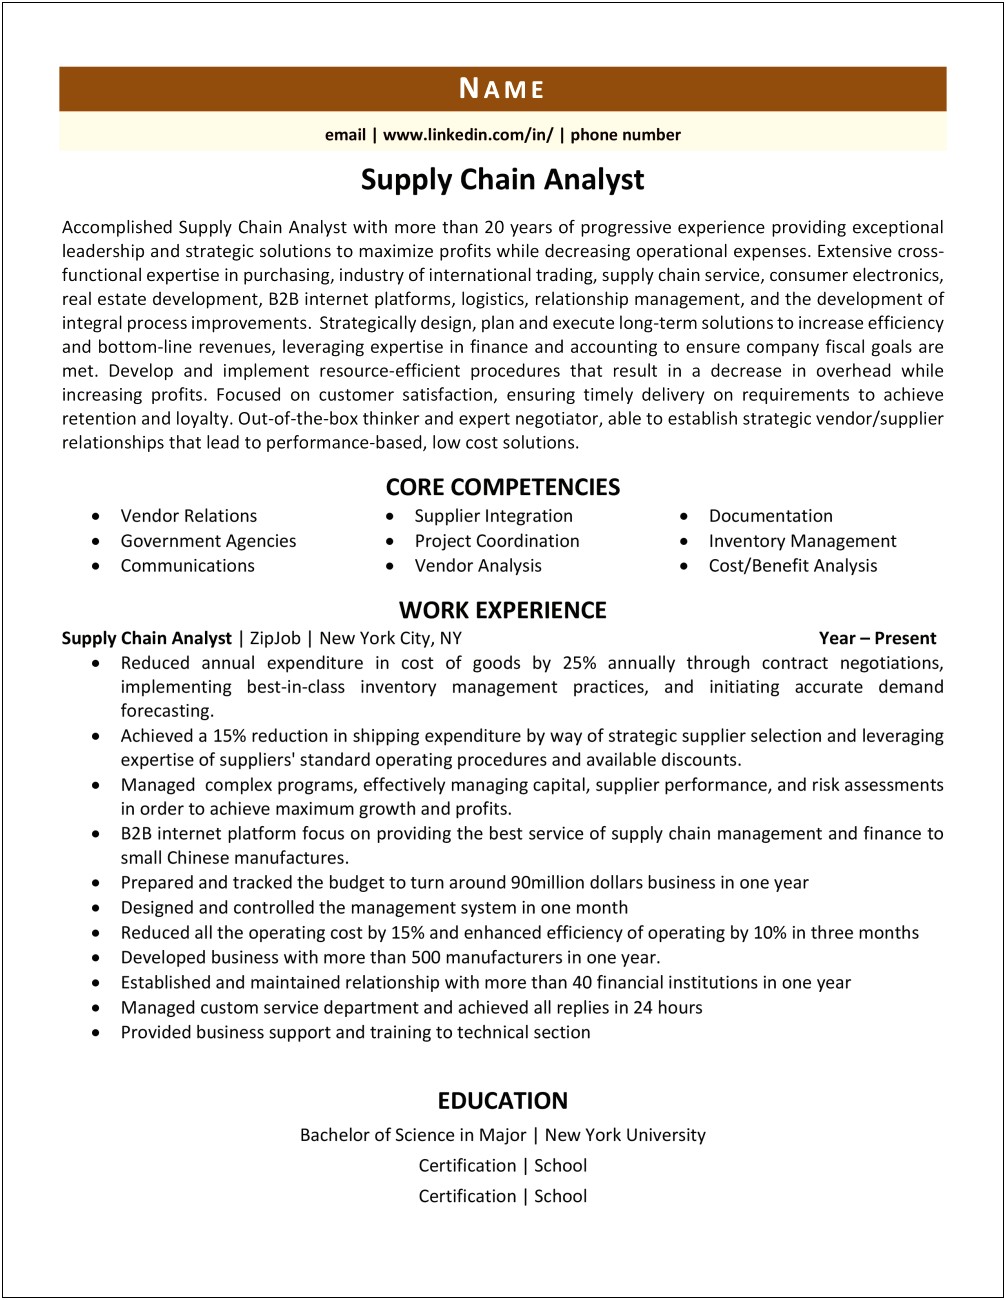 Sample Resume Of Supply Chain Analyst